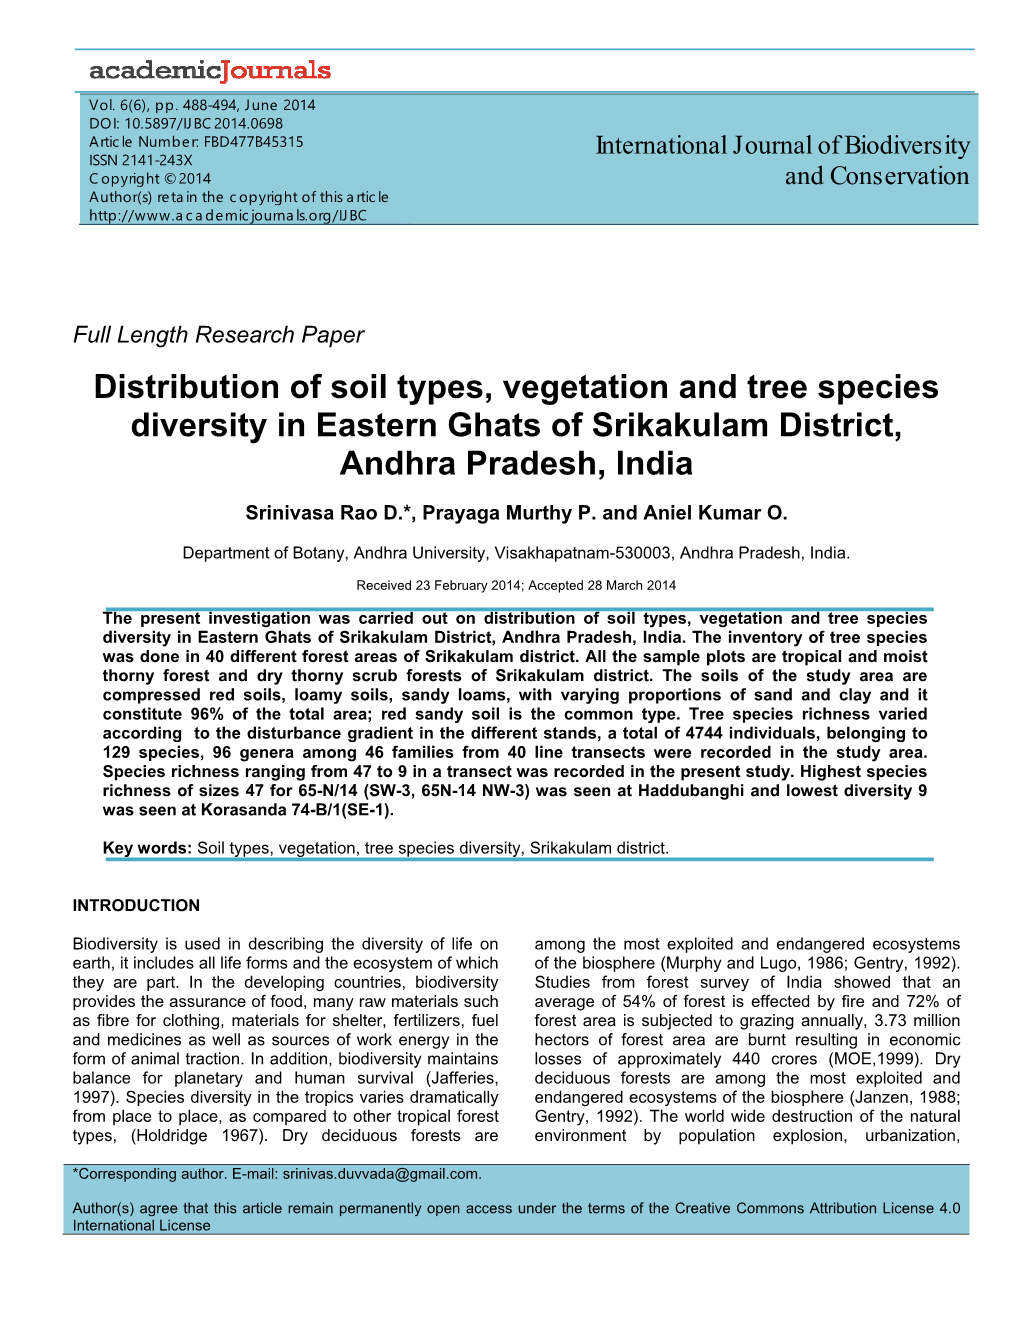 Distribution of Soil Types, Vegetation and Tree Species Diversity in Eastern Ghats of Srikakulam District, Andhra Pradesh, India